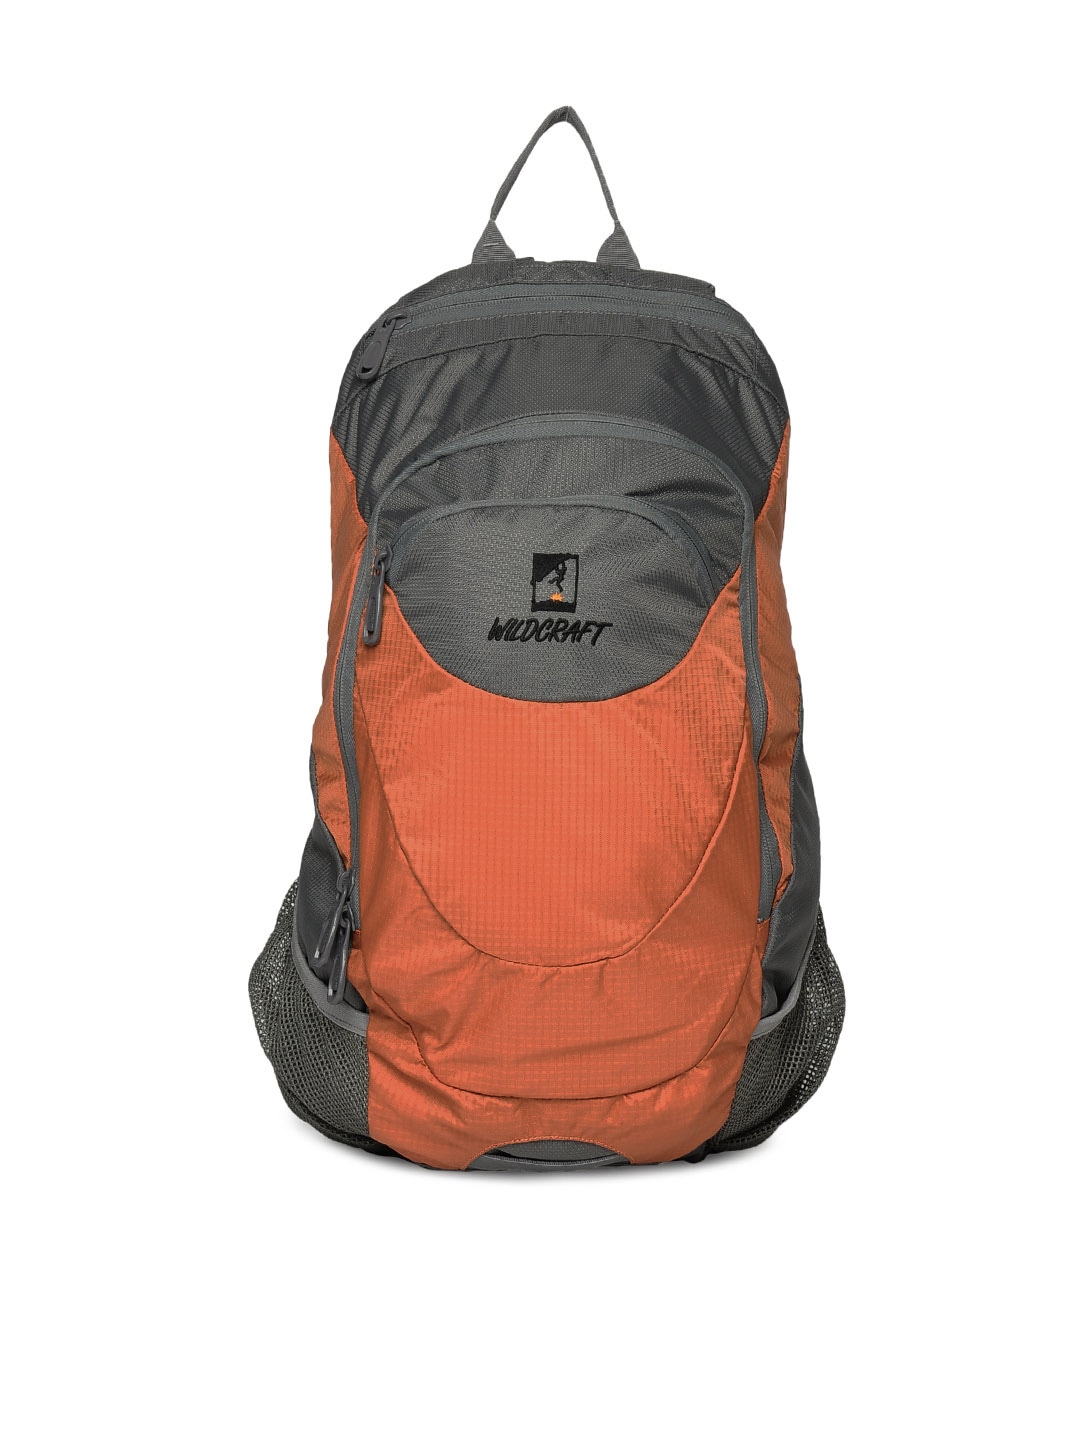 Wildcraft Unisex Orange Daypack A4 Backpack